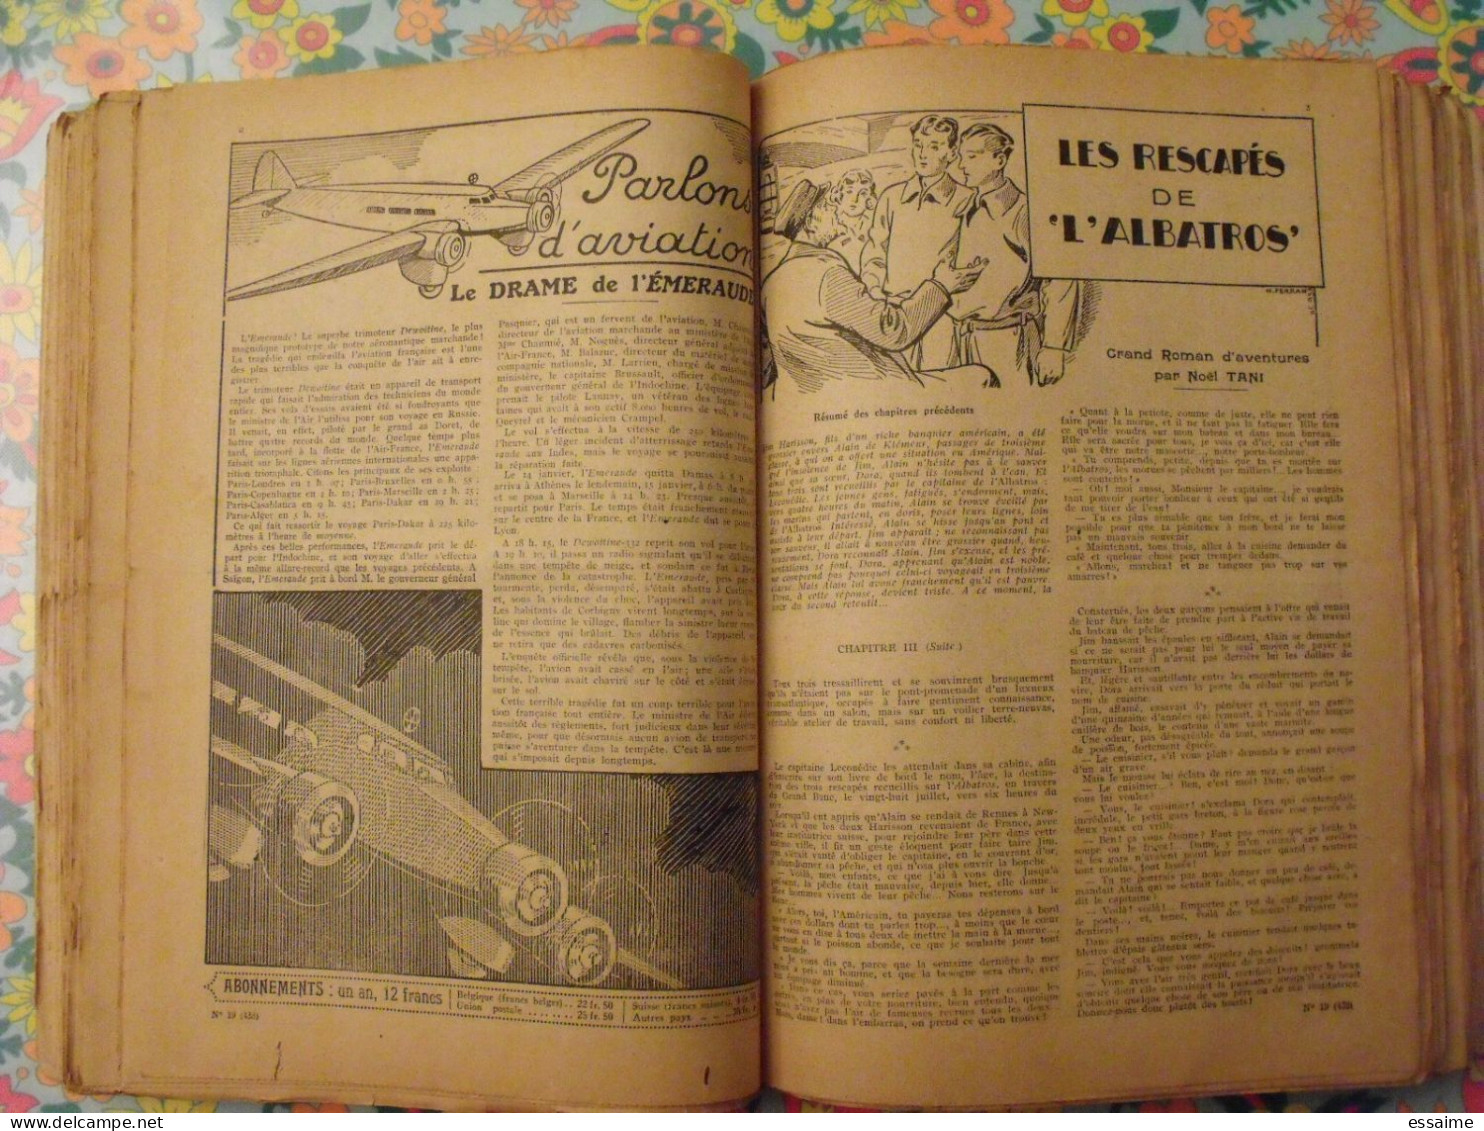 Pierrot reliure de 52 n° de 1934. n°1 à 52.  pitche, costo marijac jeanjean aviation le rallic dot bourdin cuvillier